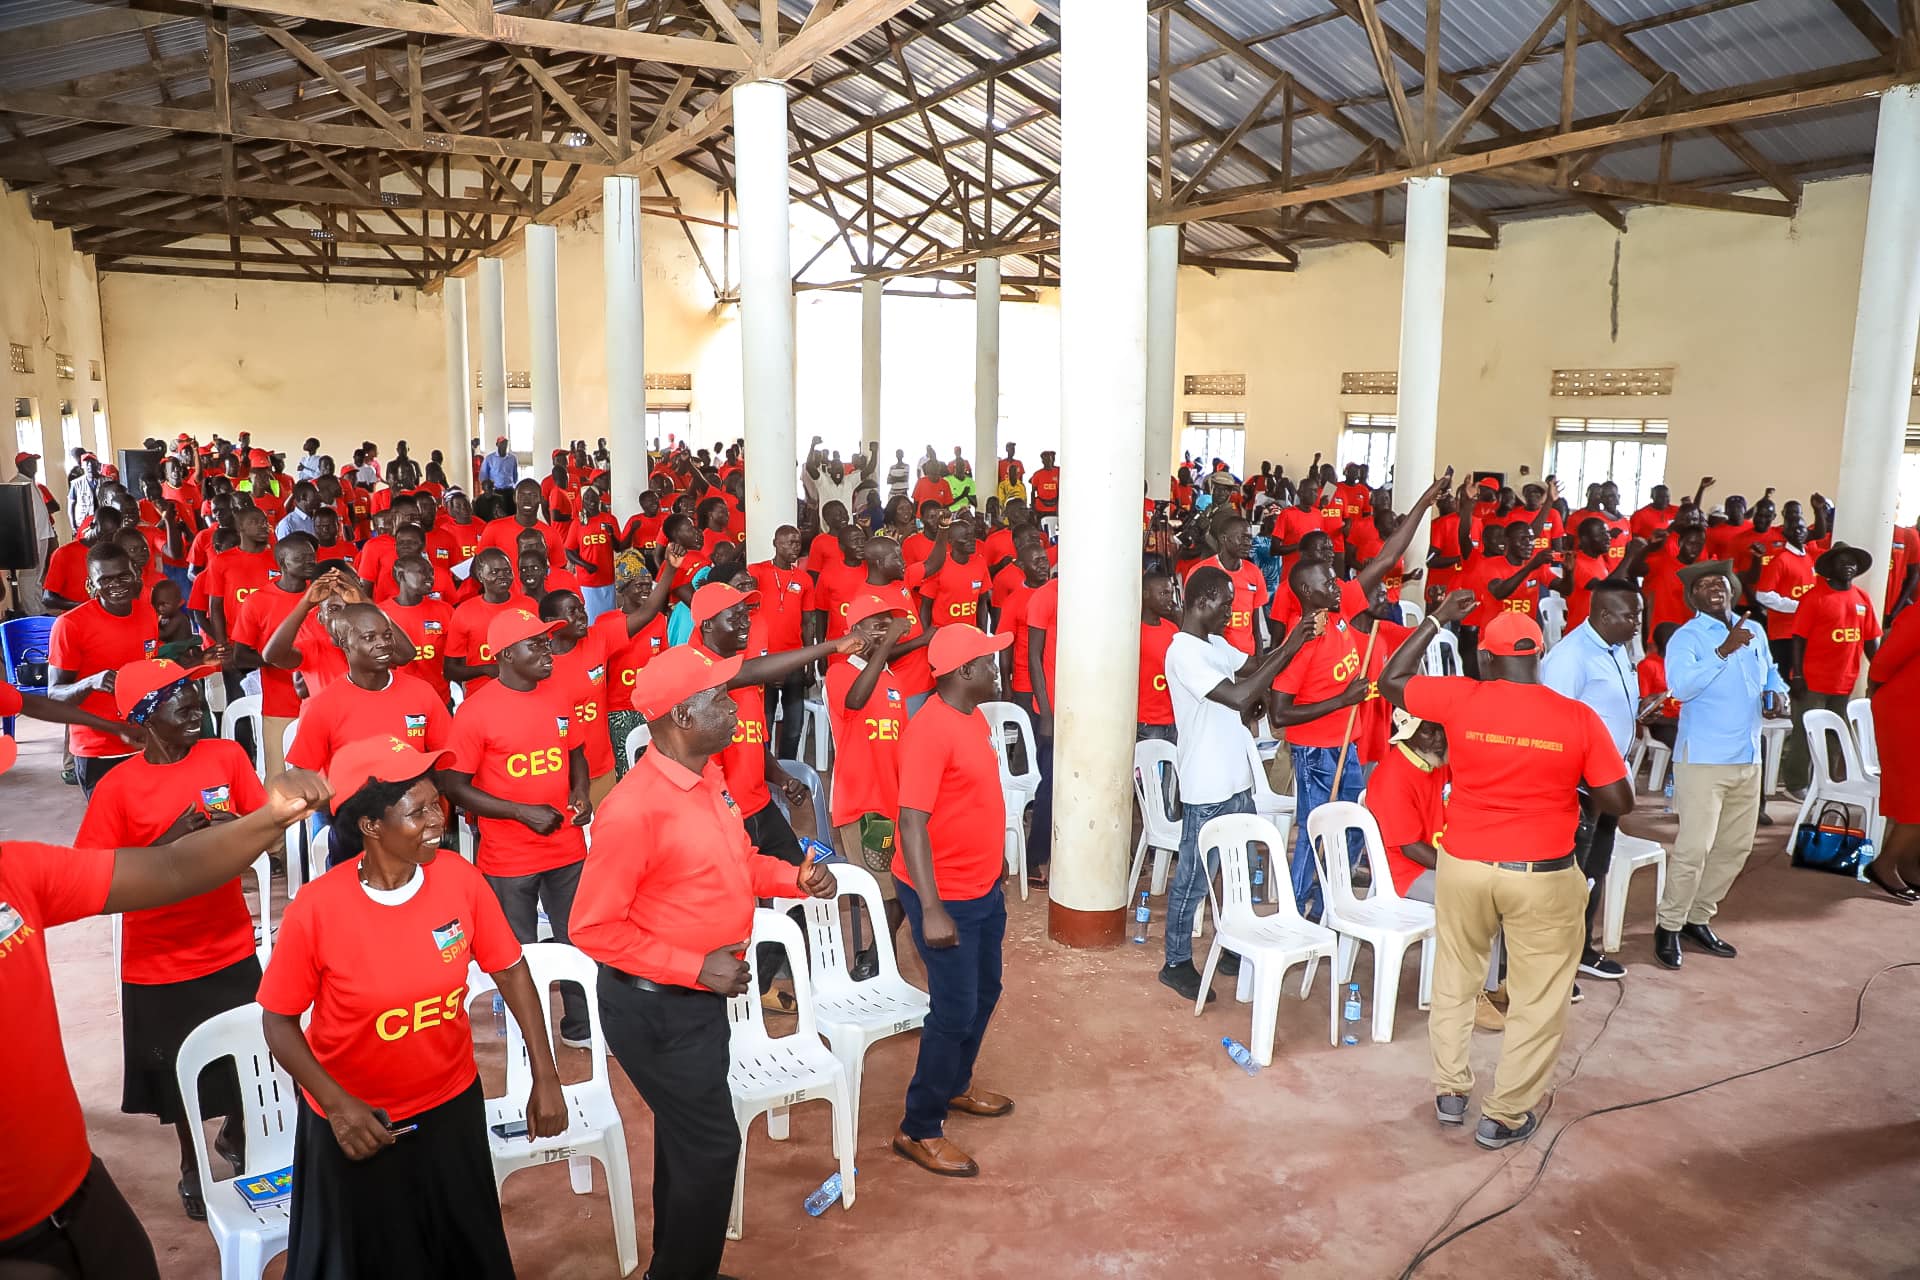 SPLM kickstarts training in Kajo-Keji, targets elections